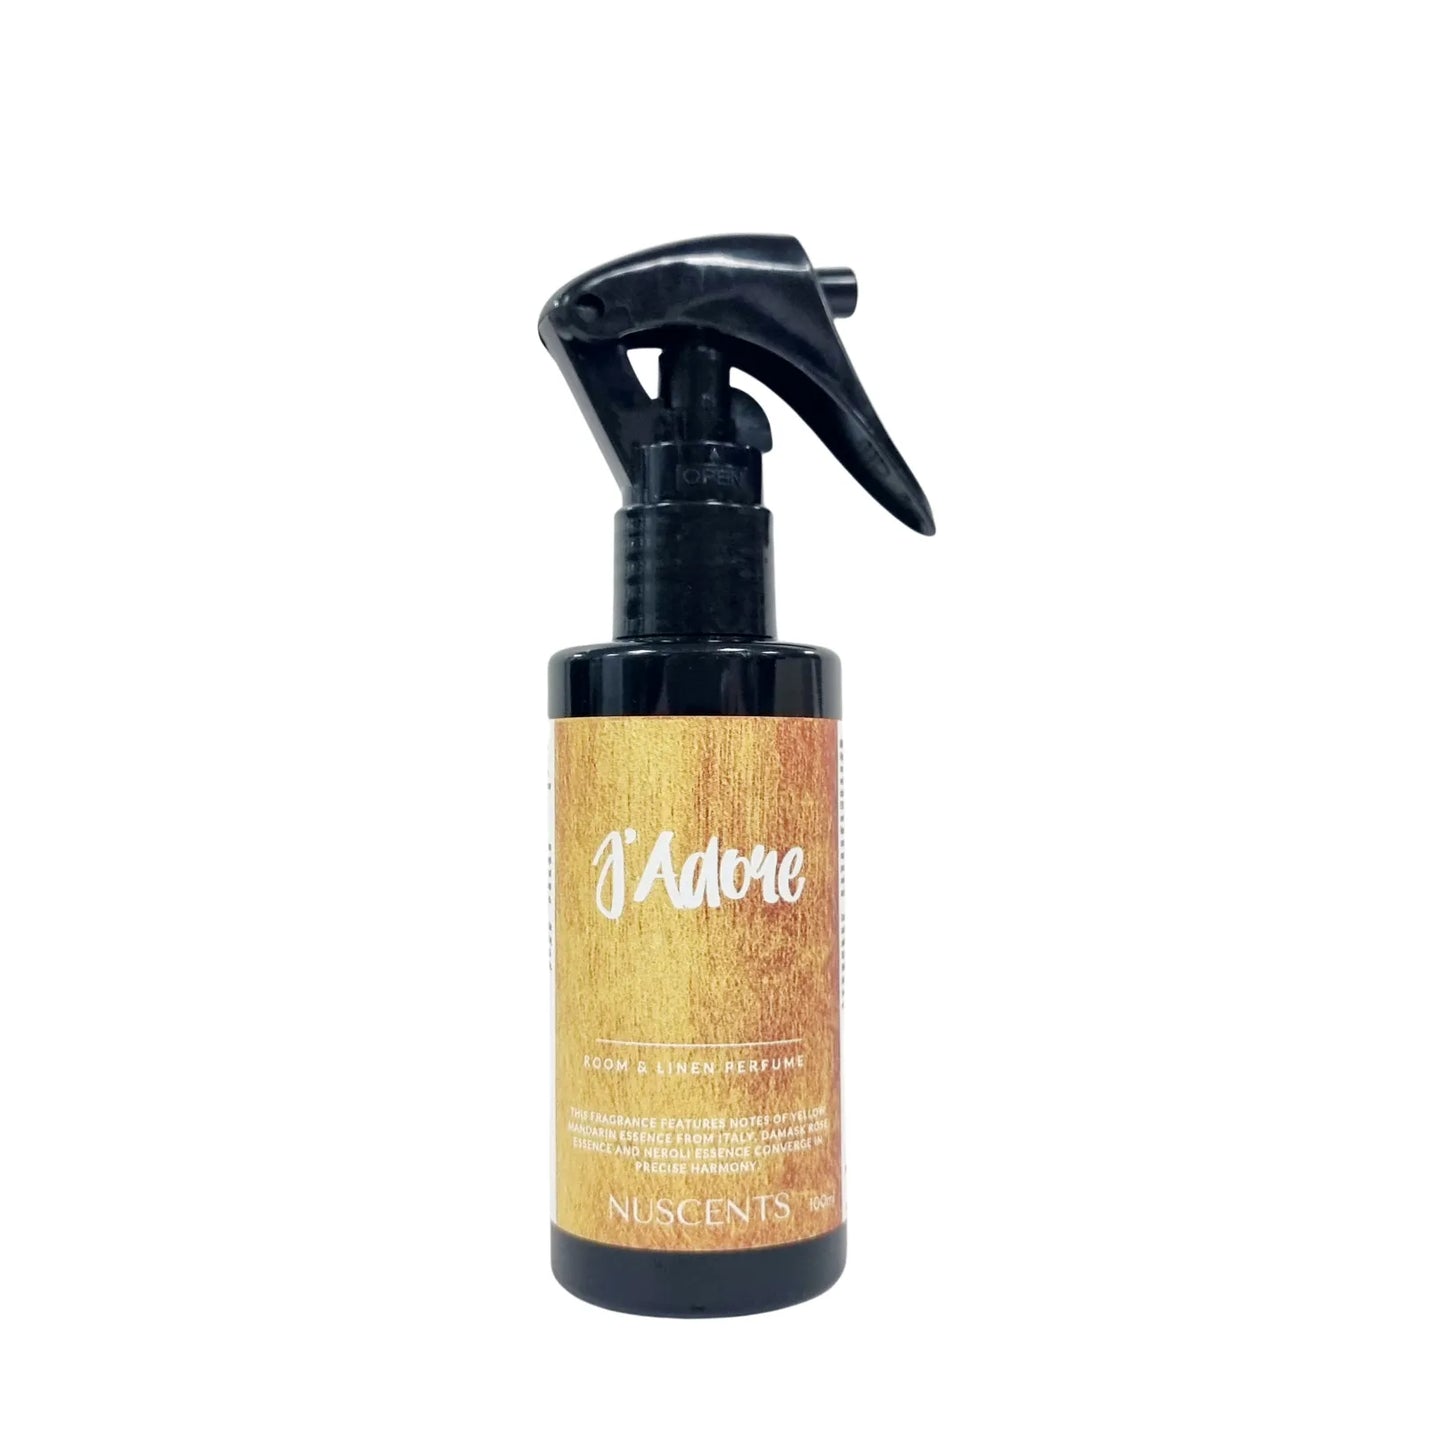 J'Adore Room & Linen Perfume Spray